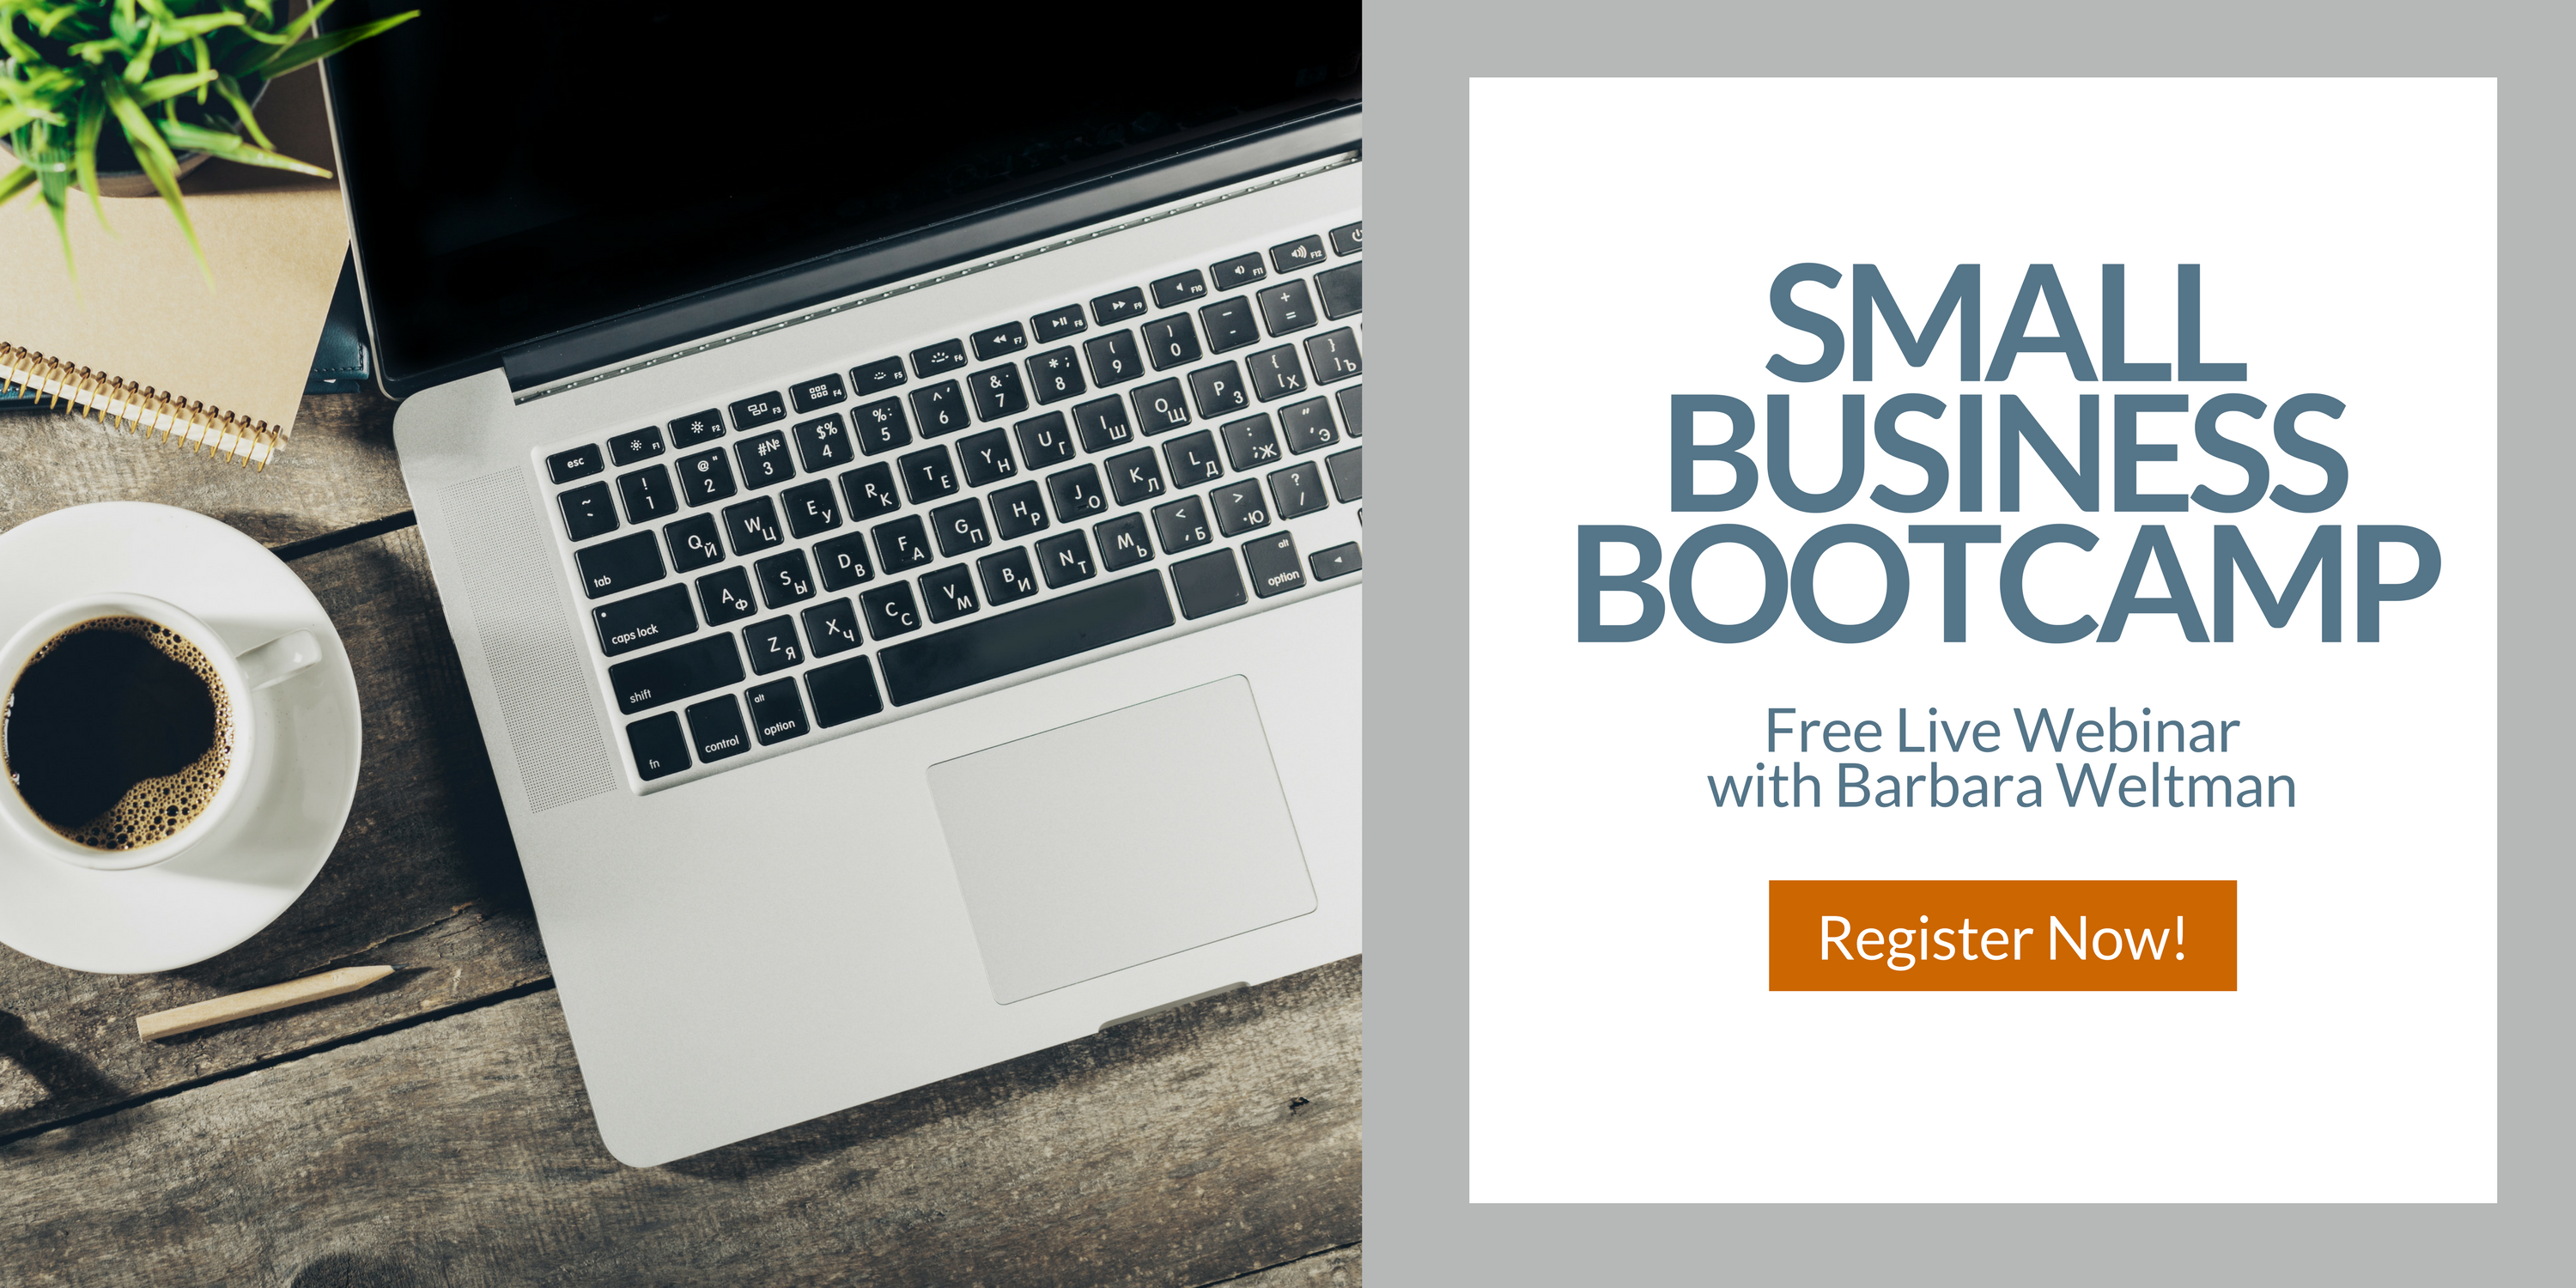 Announcing my FREE Webinar - Small Business Bootcamp - Barbara Weltman